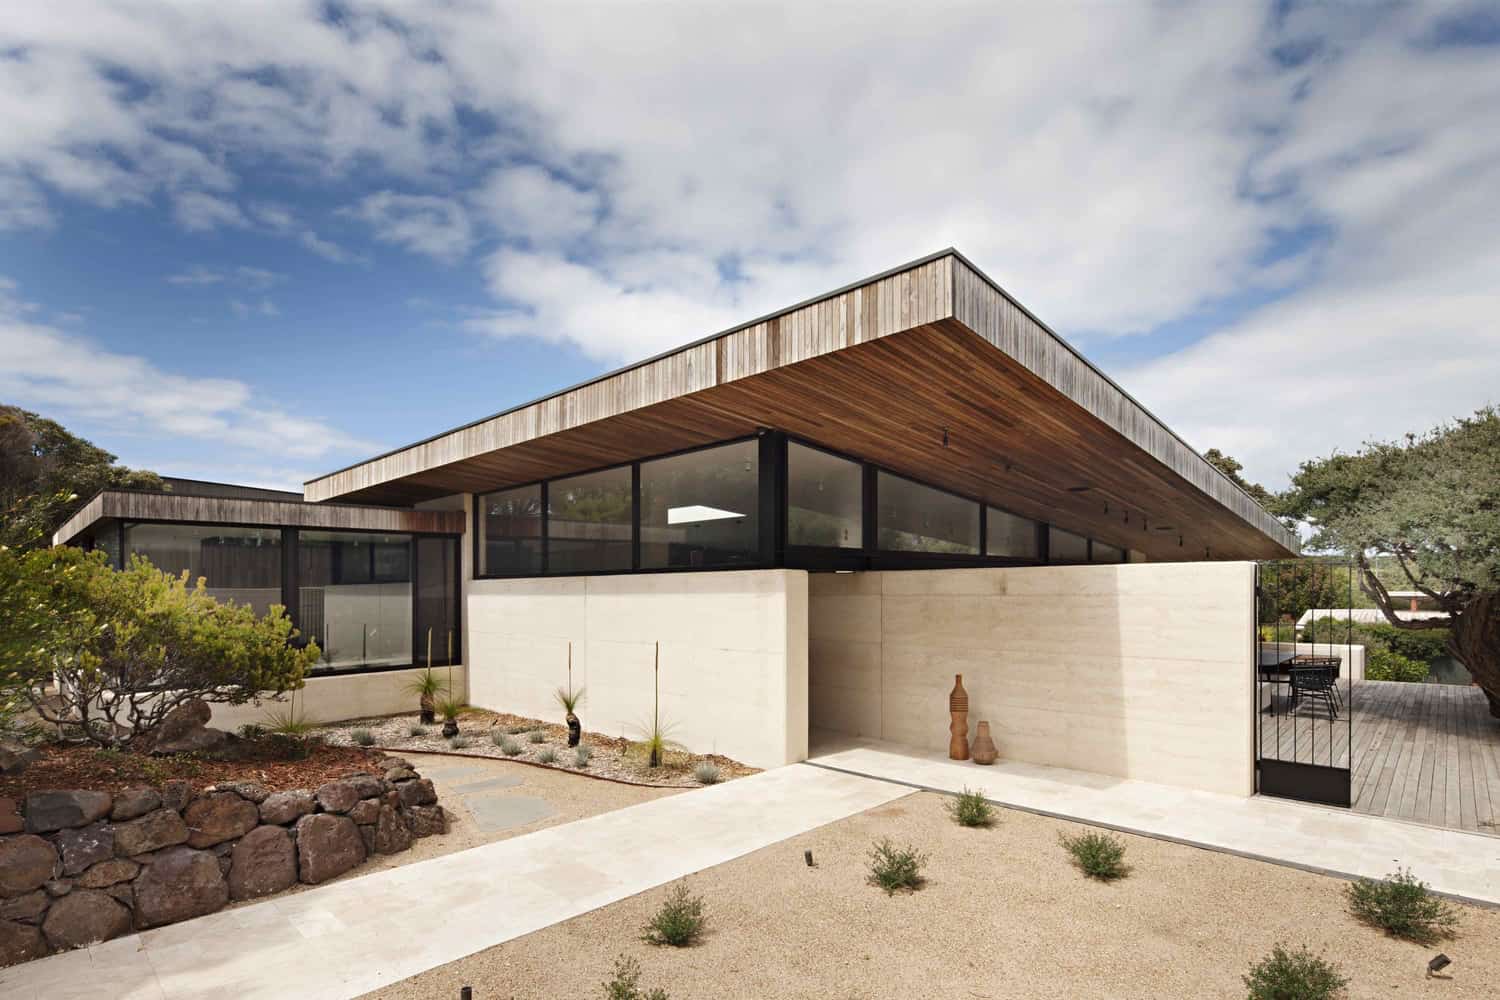 Coastal home in Australia showcases rammed earth and timber